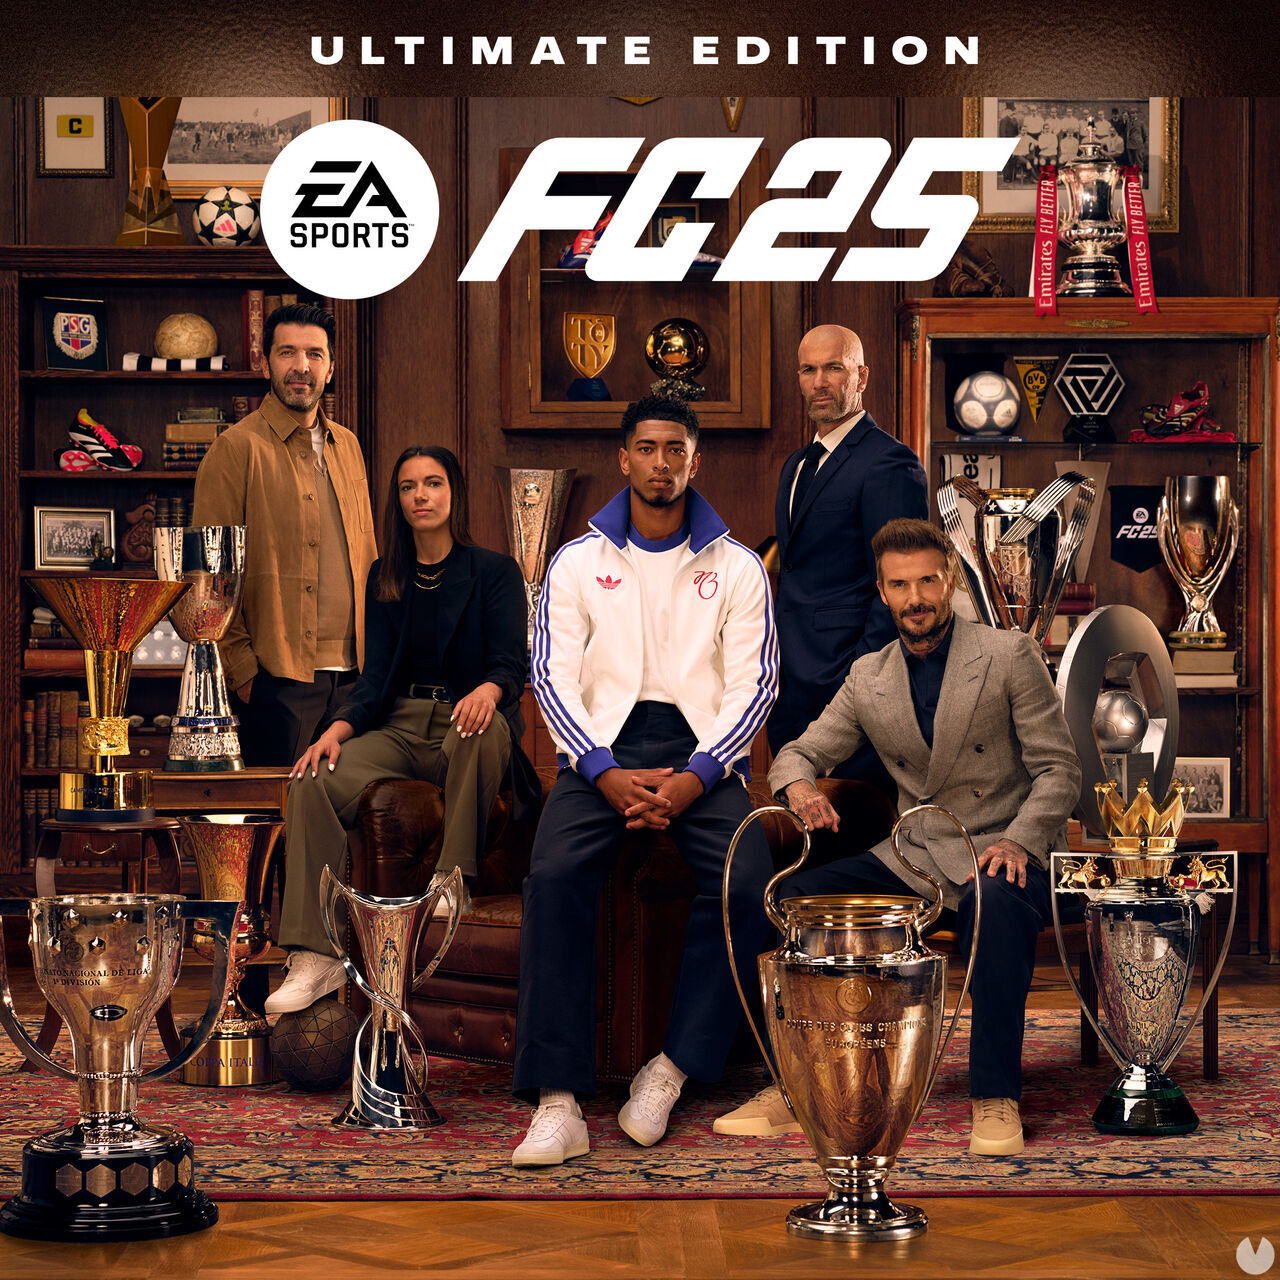 Portada EA Sports FC 25 Ultimate Edition.